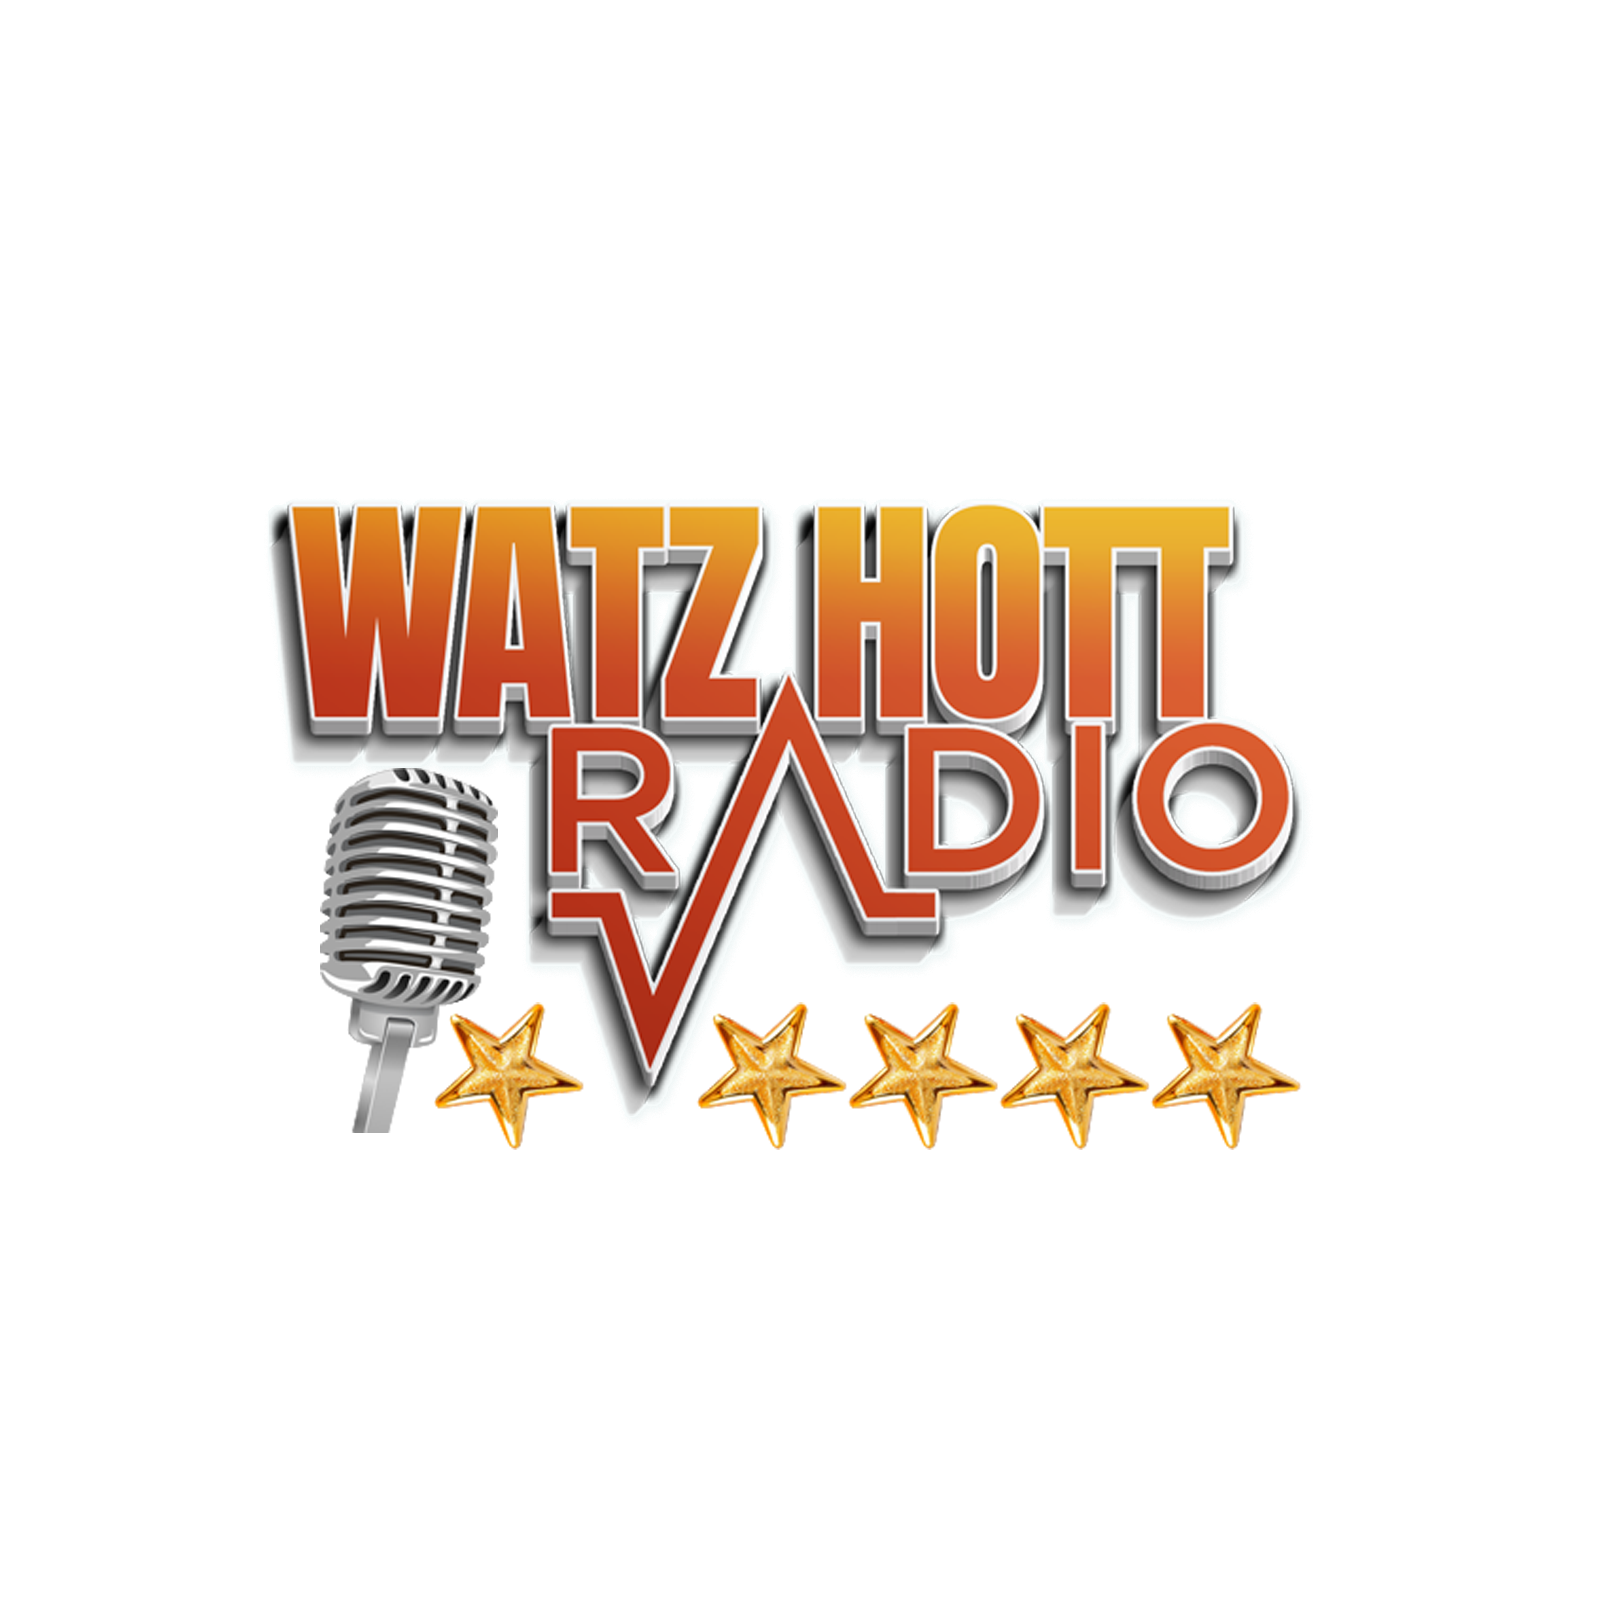 WATZHOTT RADIO